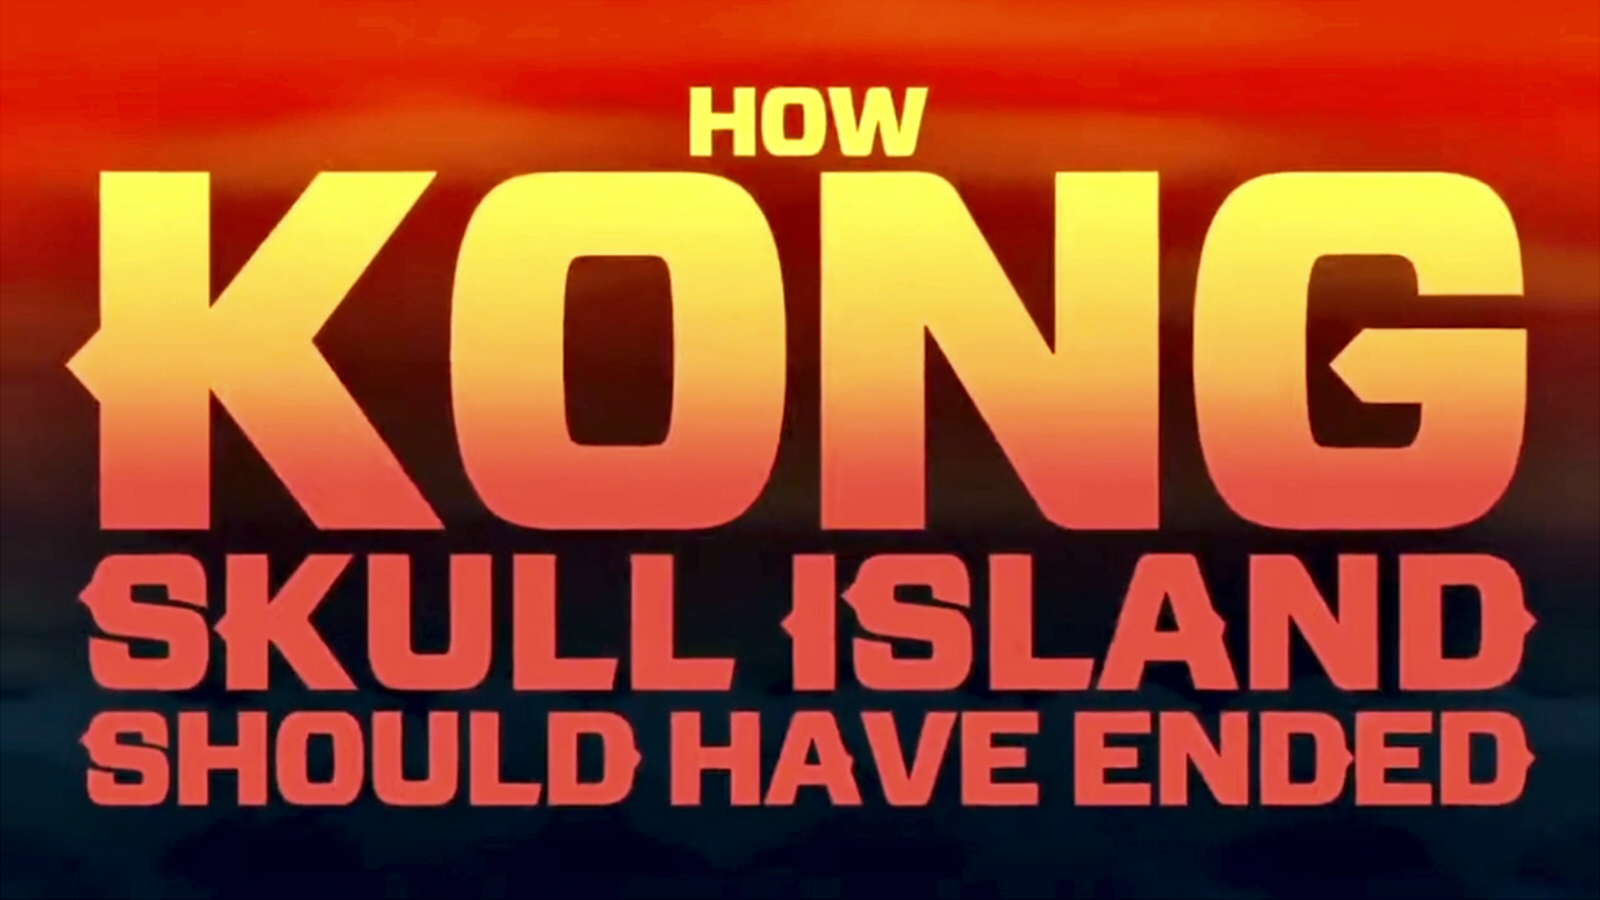 Kong: Skull Island-How Should Have Ended